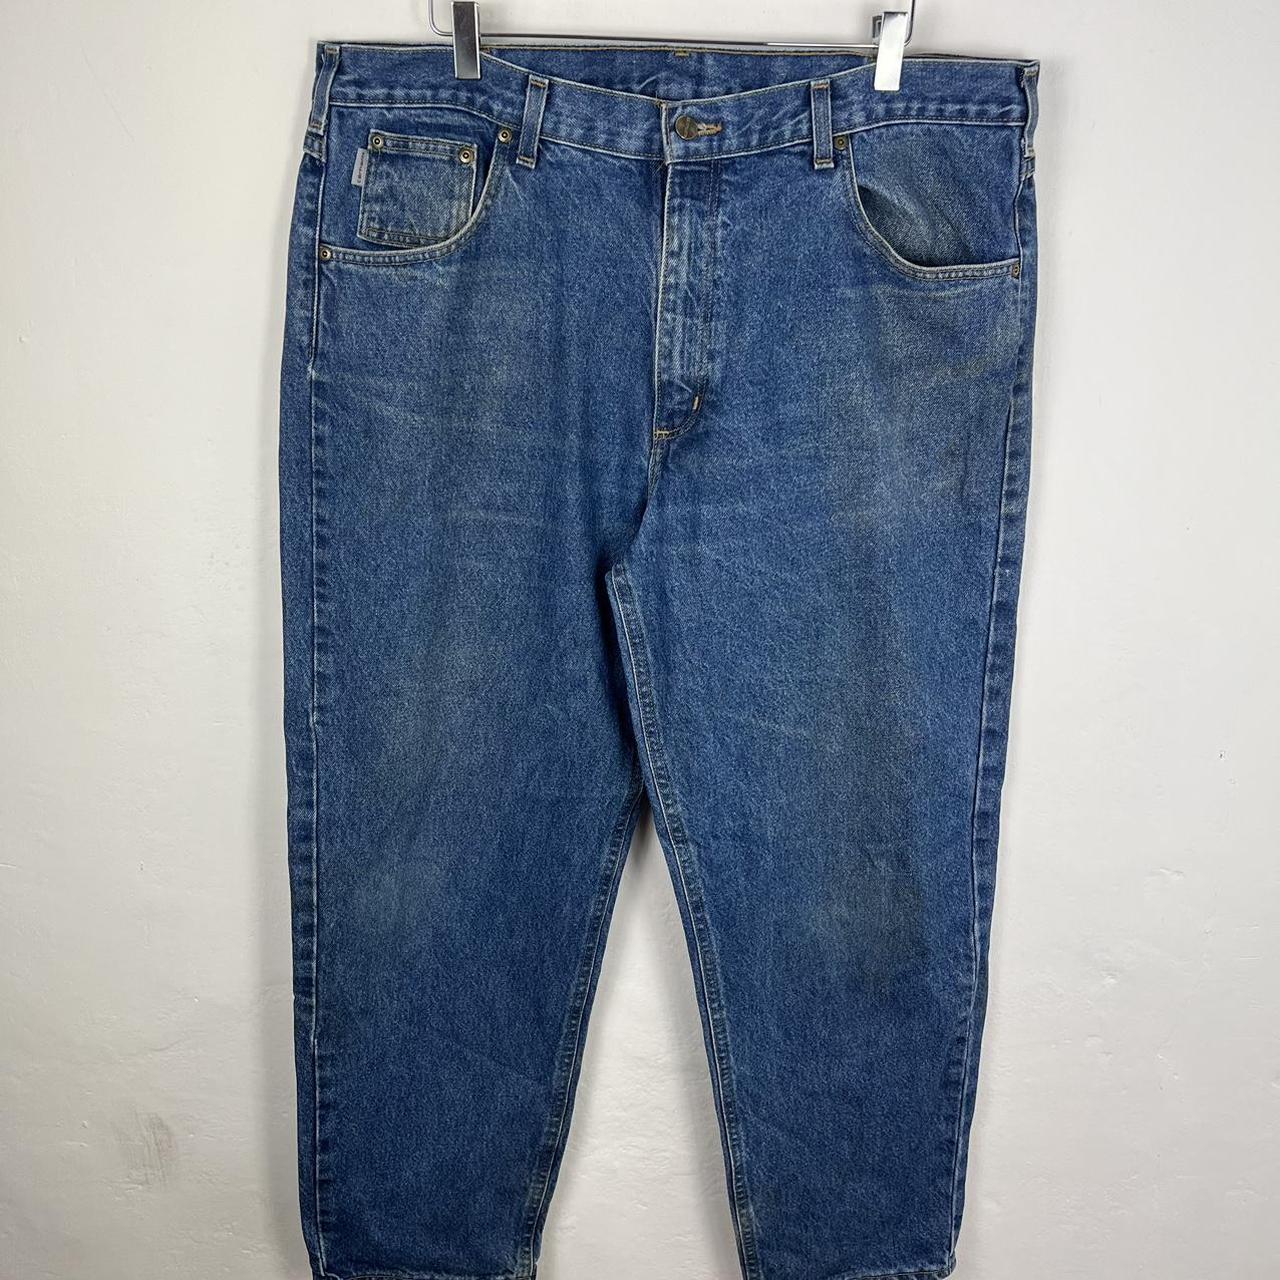 Carhartt denim jeans 40x30